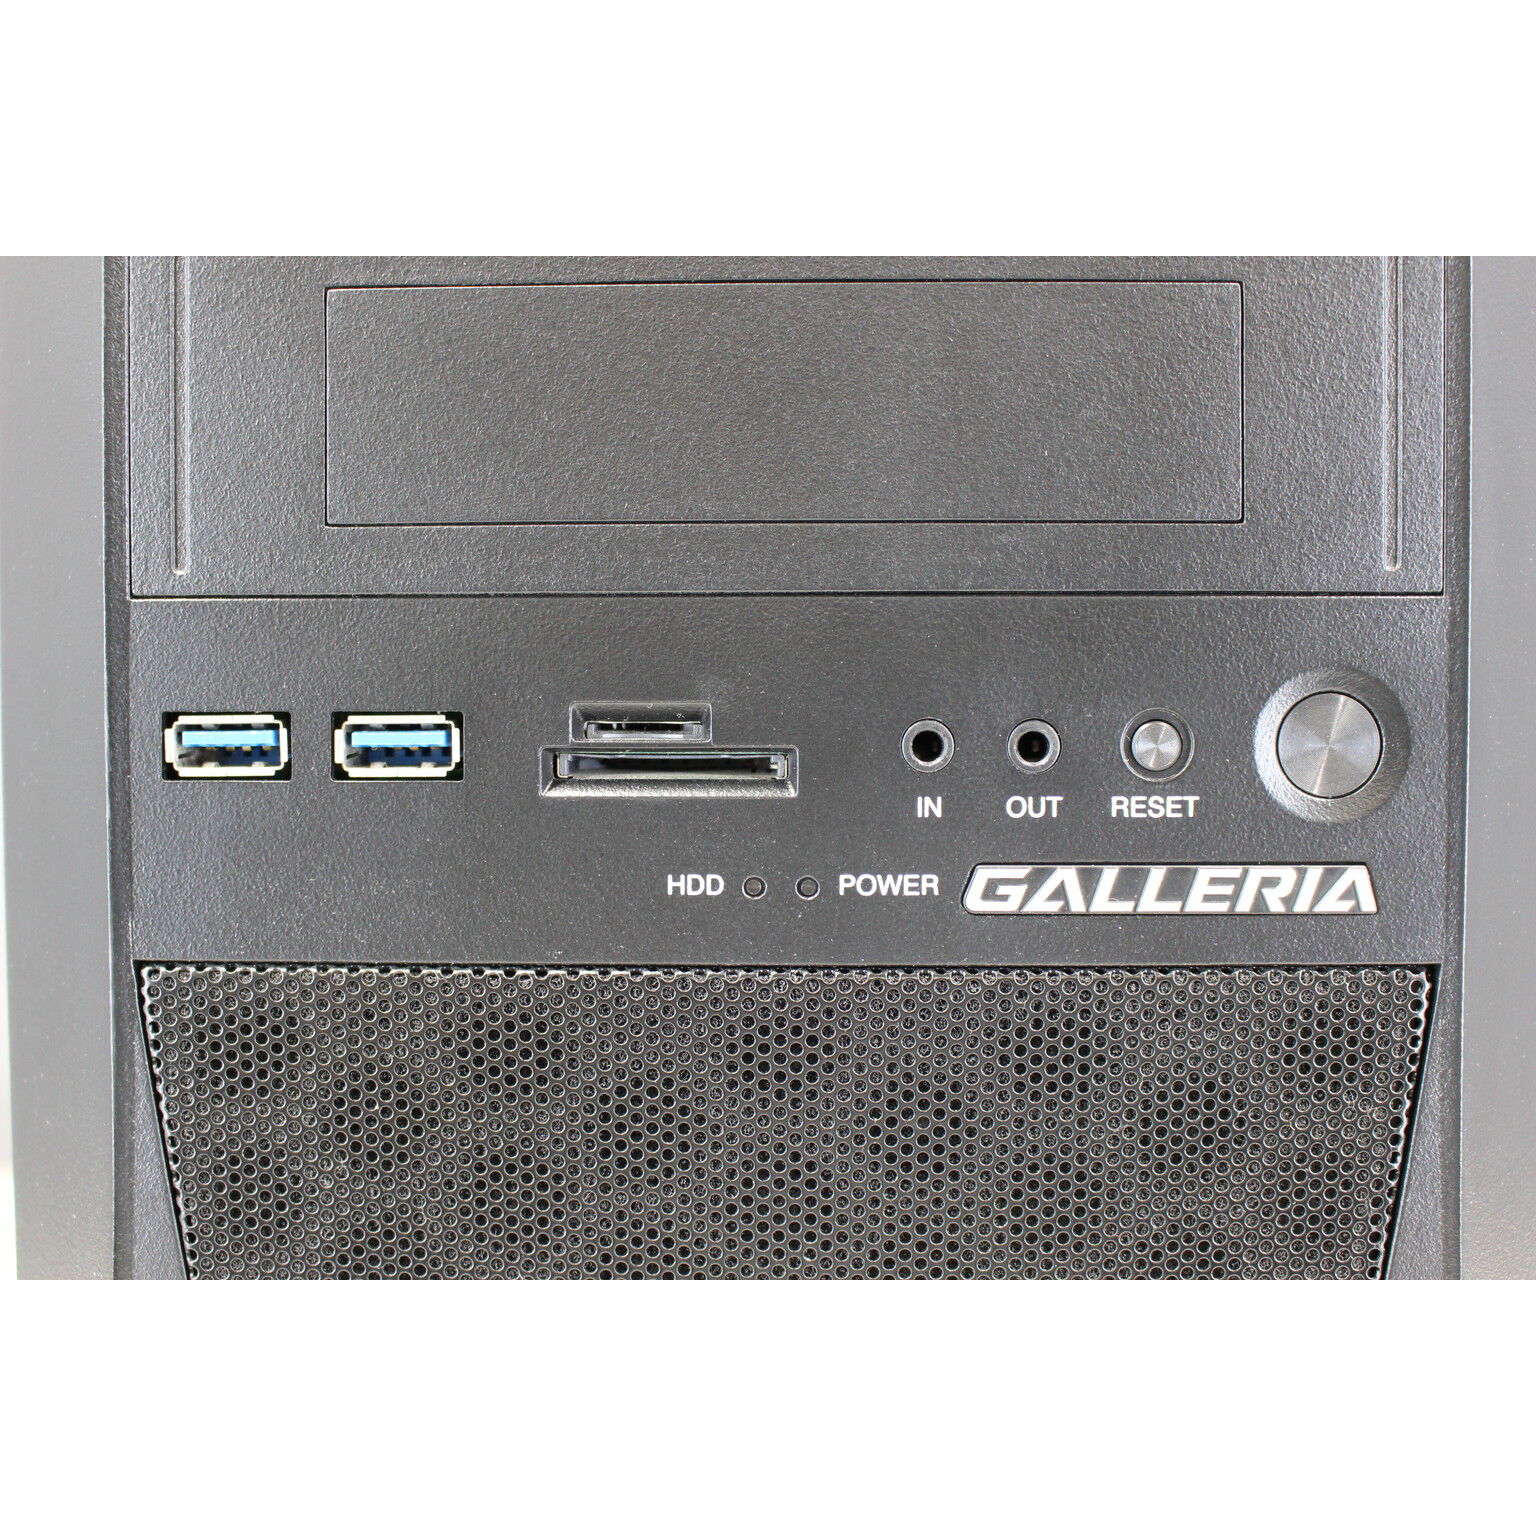 中古 THIRDWAVE GALLERIA KT(Intel Core i7-8700K 3.70GHz/16GB/SSD